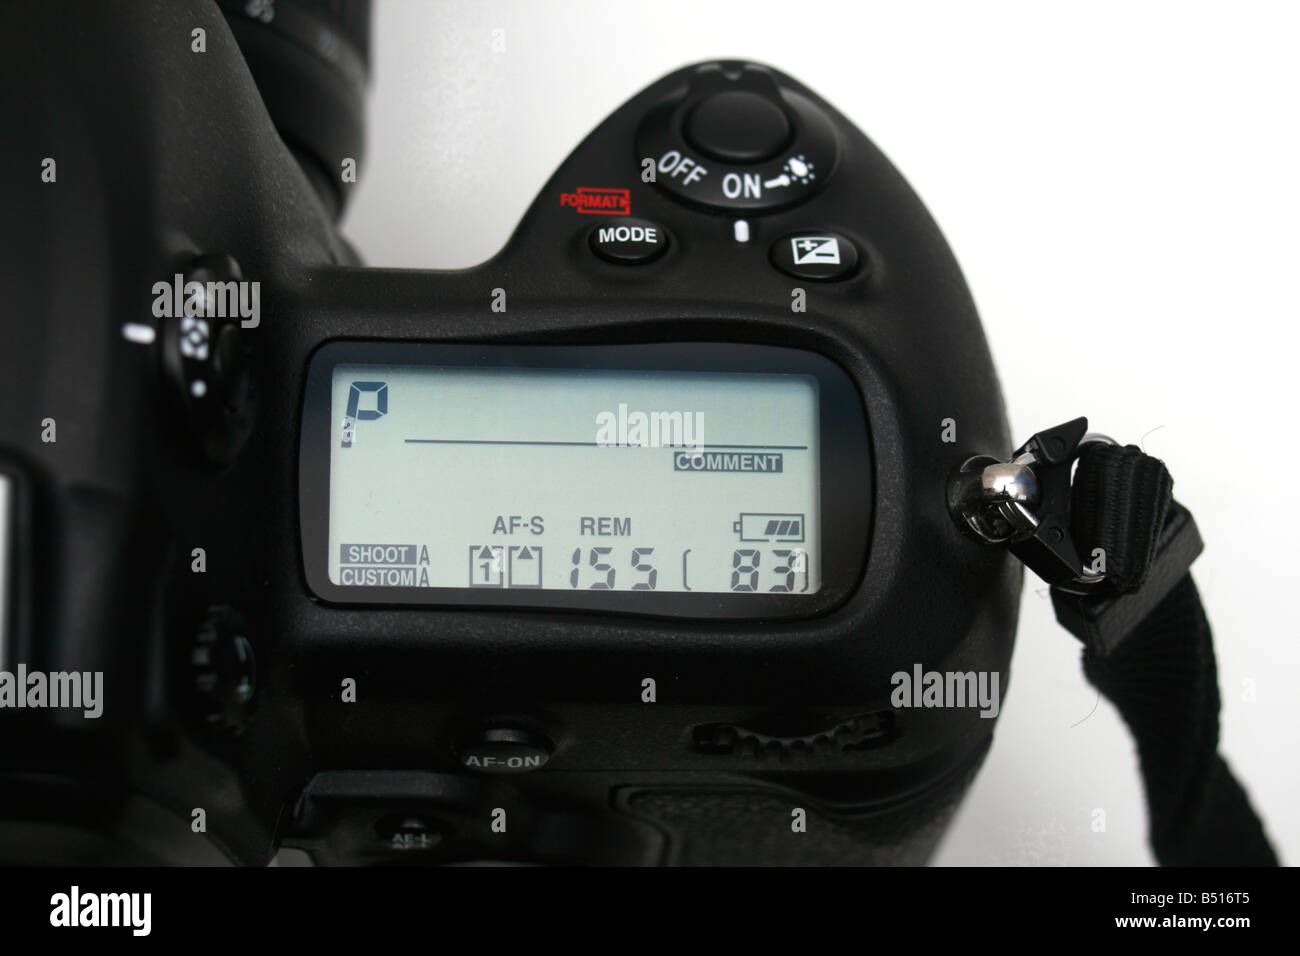 Nikon D3 Nikons new flagship professional camera Stock Photo